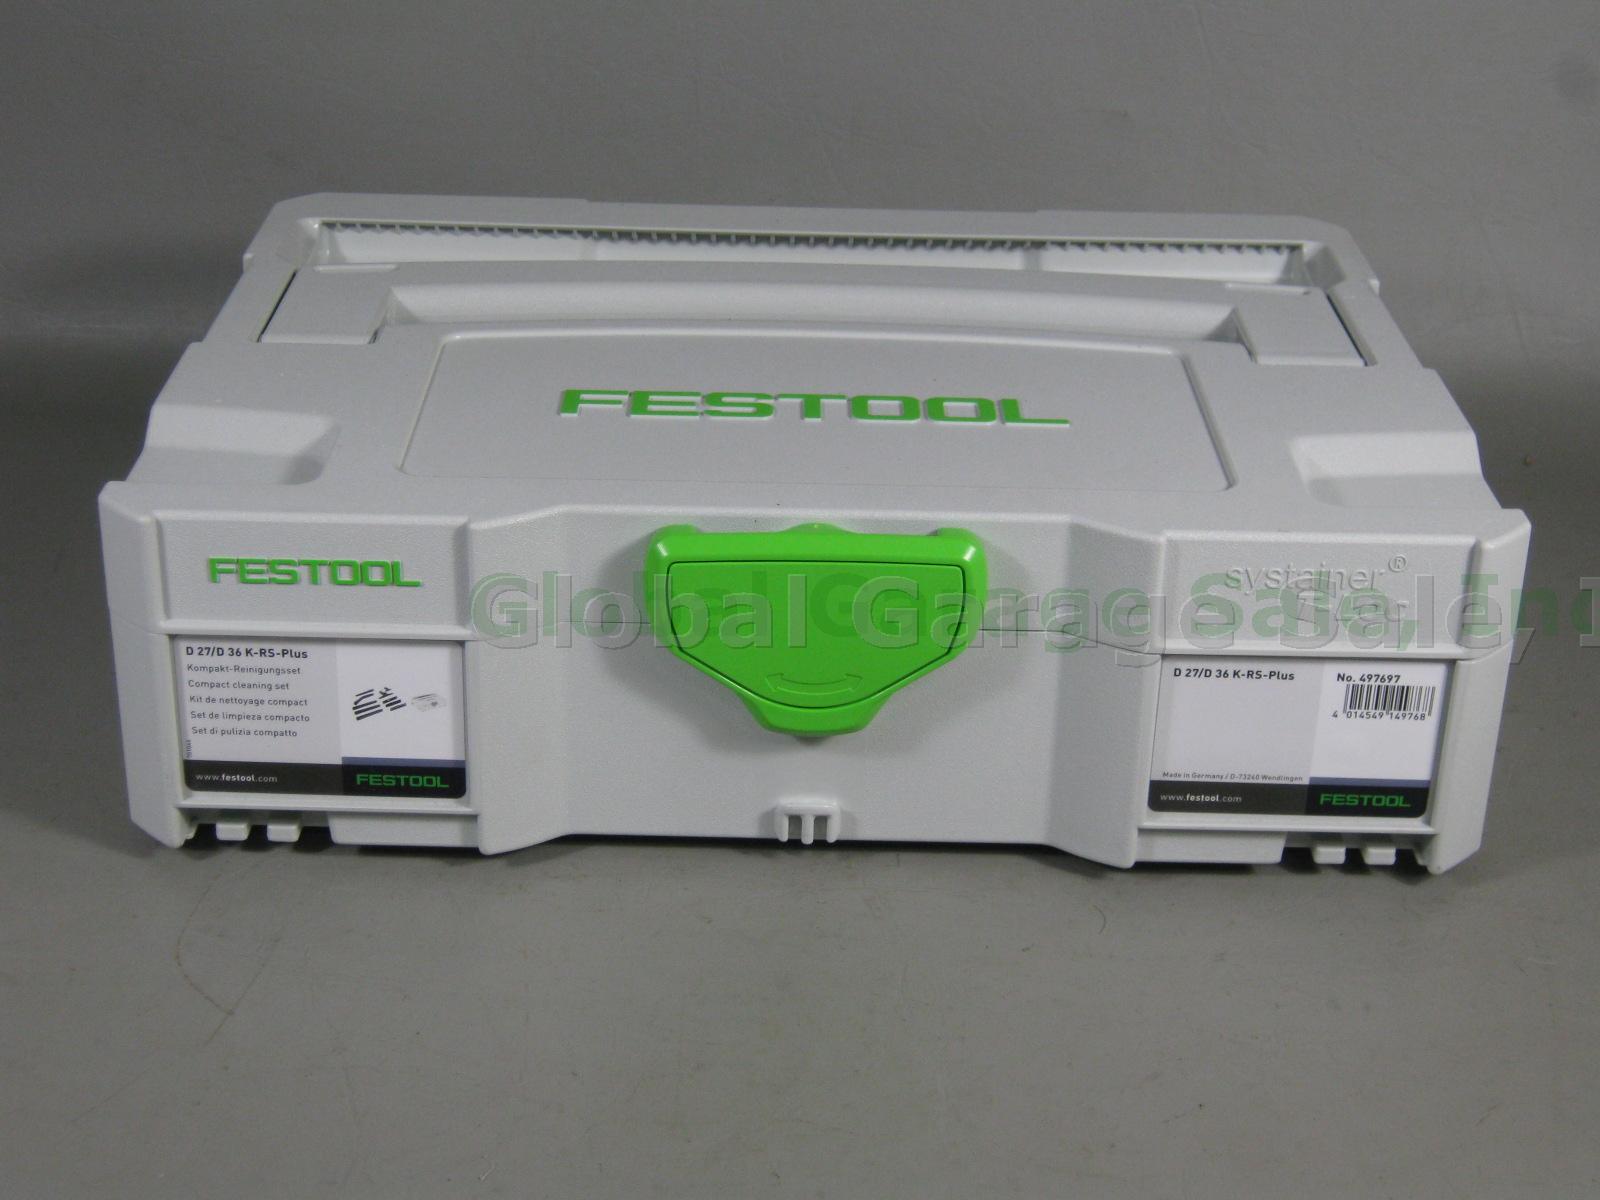 NEW Festool D 27/D 36 K-RS-Plus Compact Cleaning Set 497697 T-Loc Sustainer Case 3